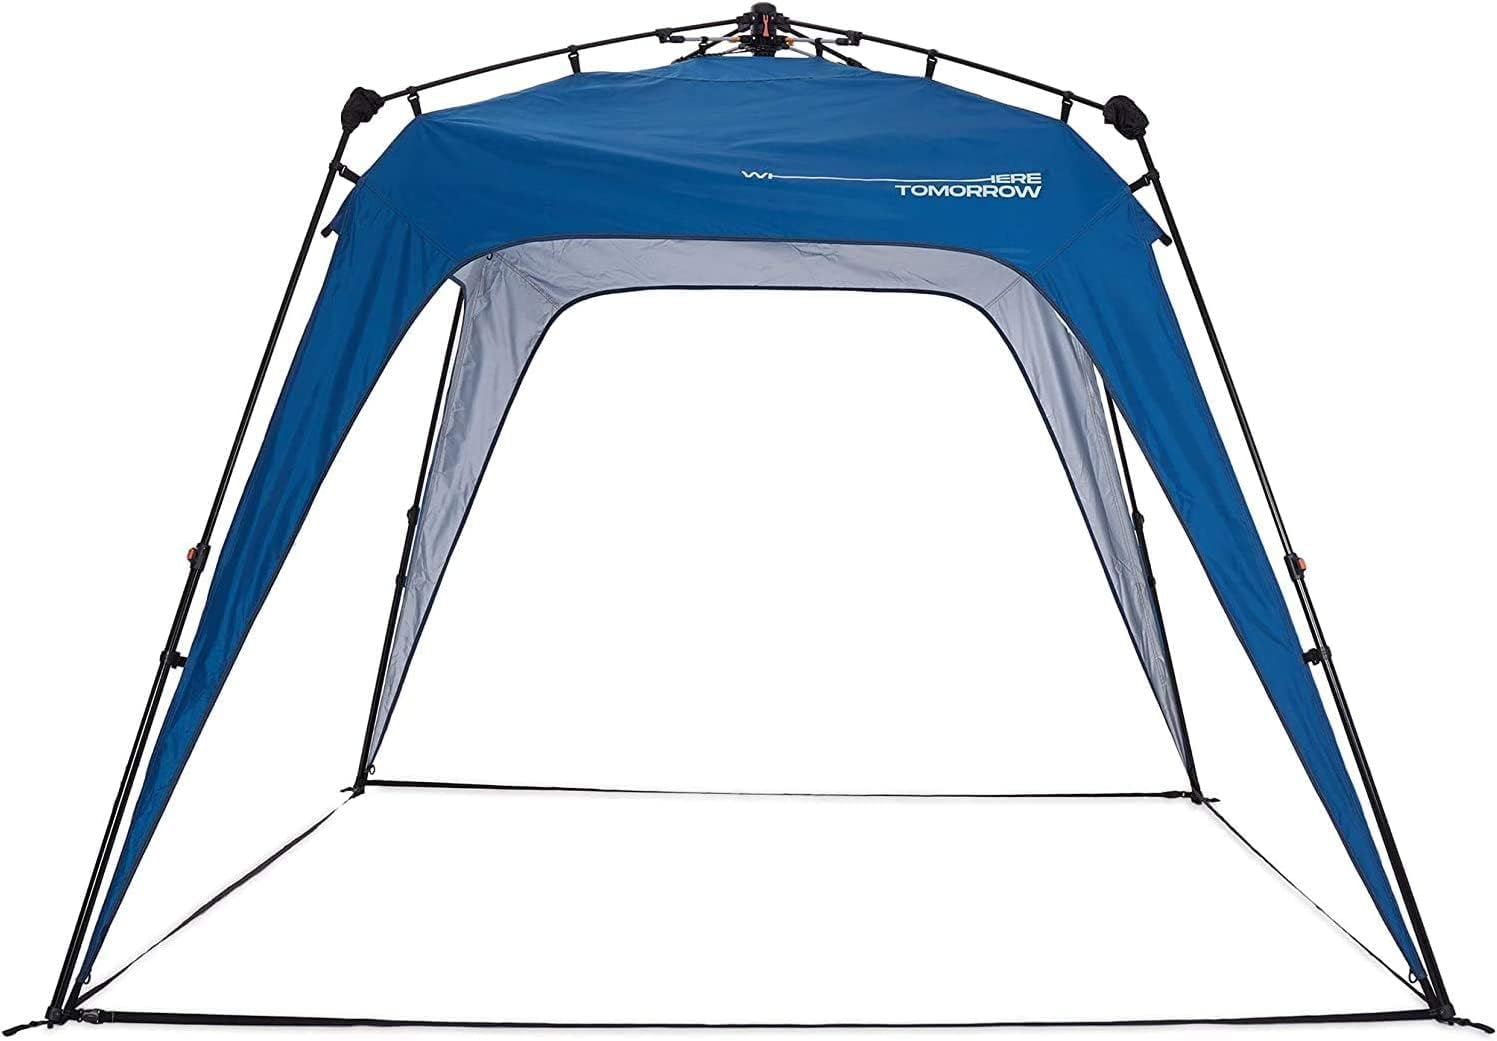 lumaland gazebo tent blue polyester gazebo waterproof frame